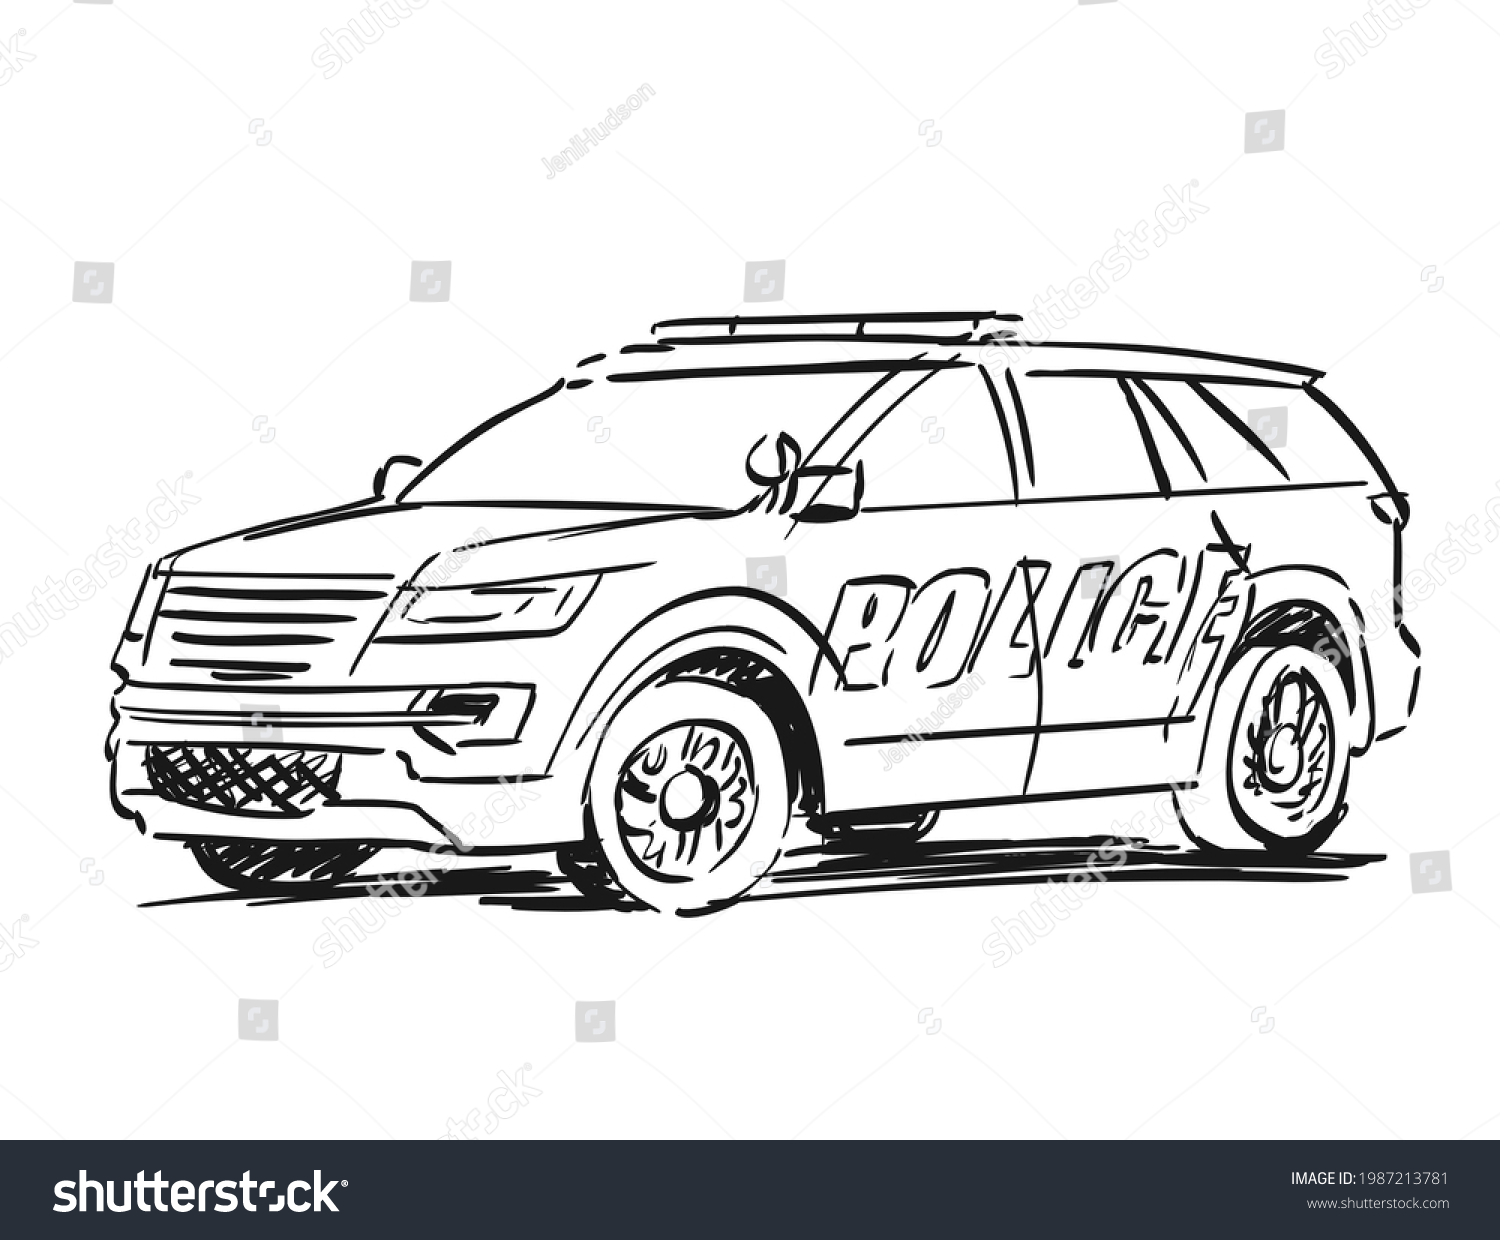 Police Car Illustration Drawing Storyboard Stock Illustration ...